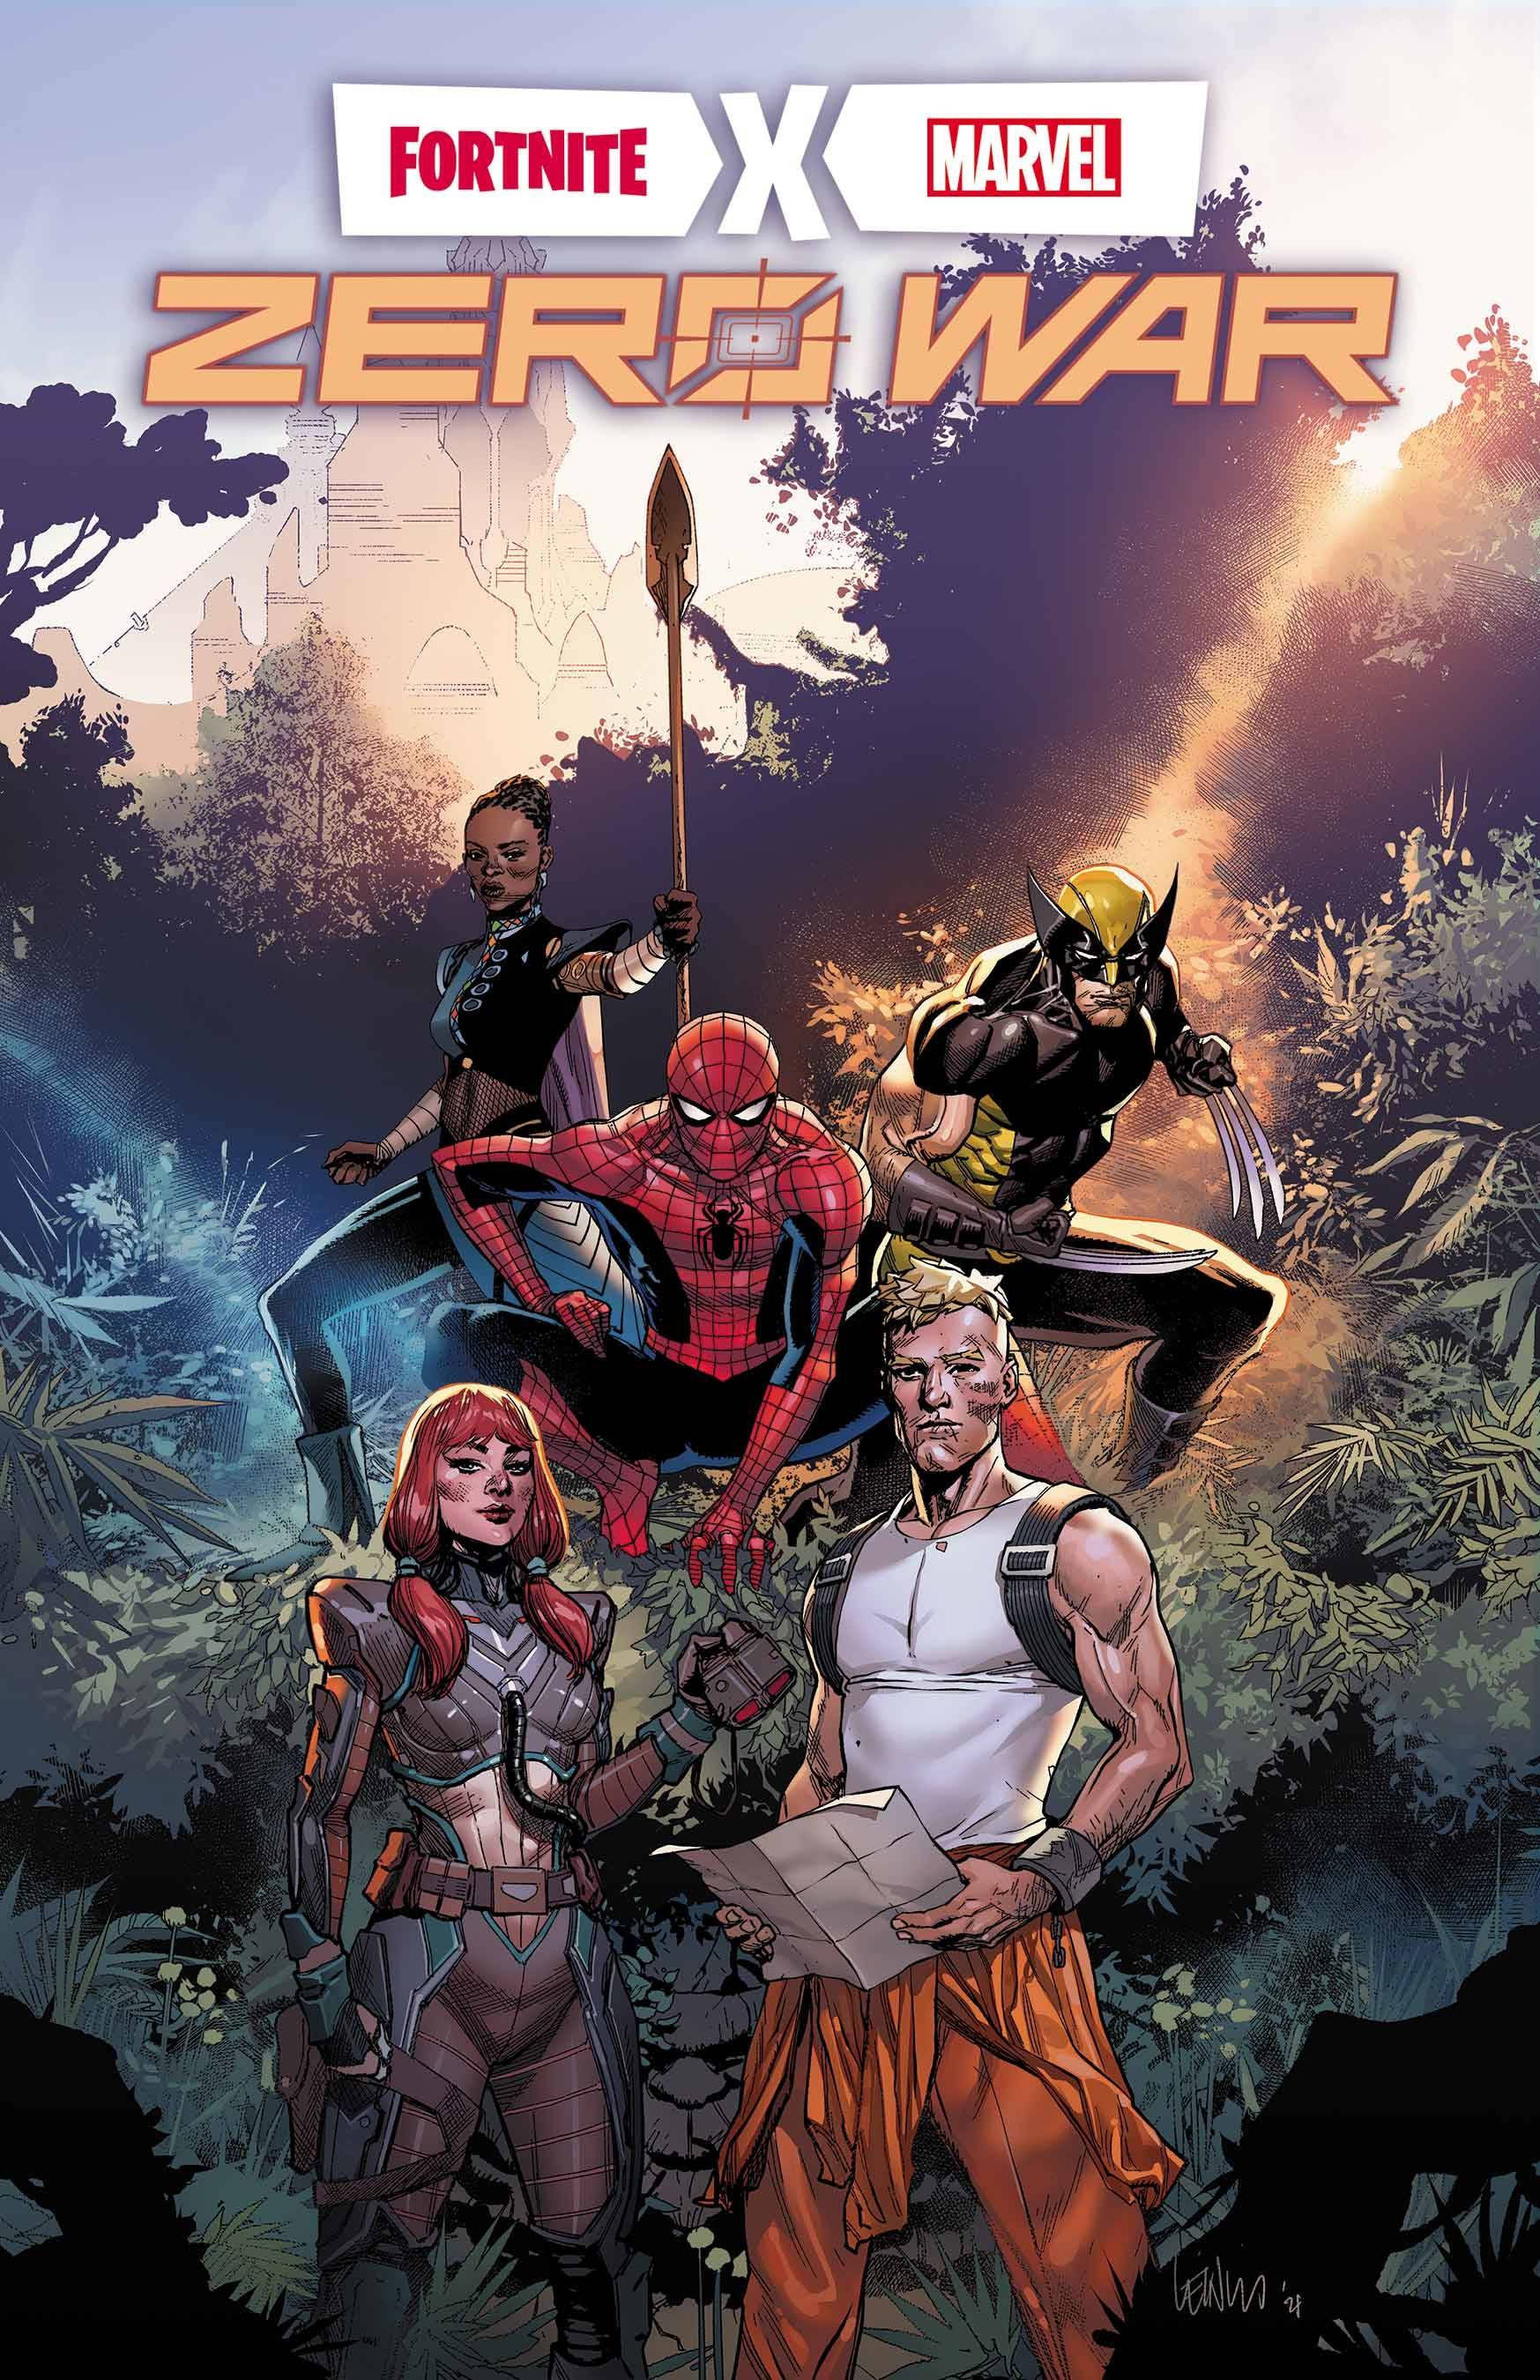 Fortnite X Marvel Zero War #1 (Of 5) Cover A